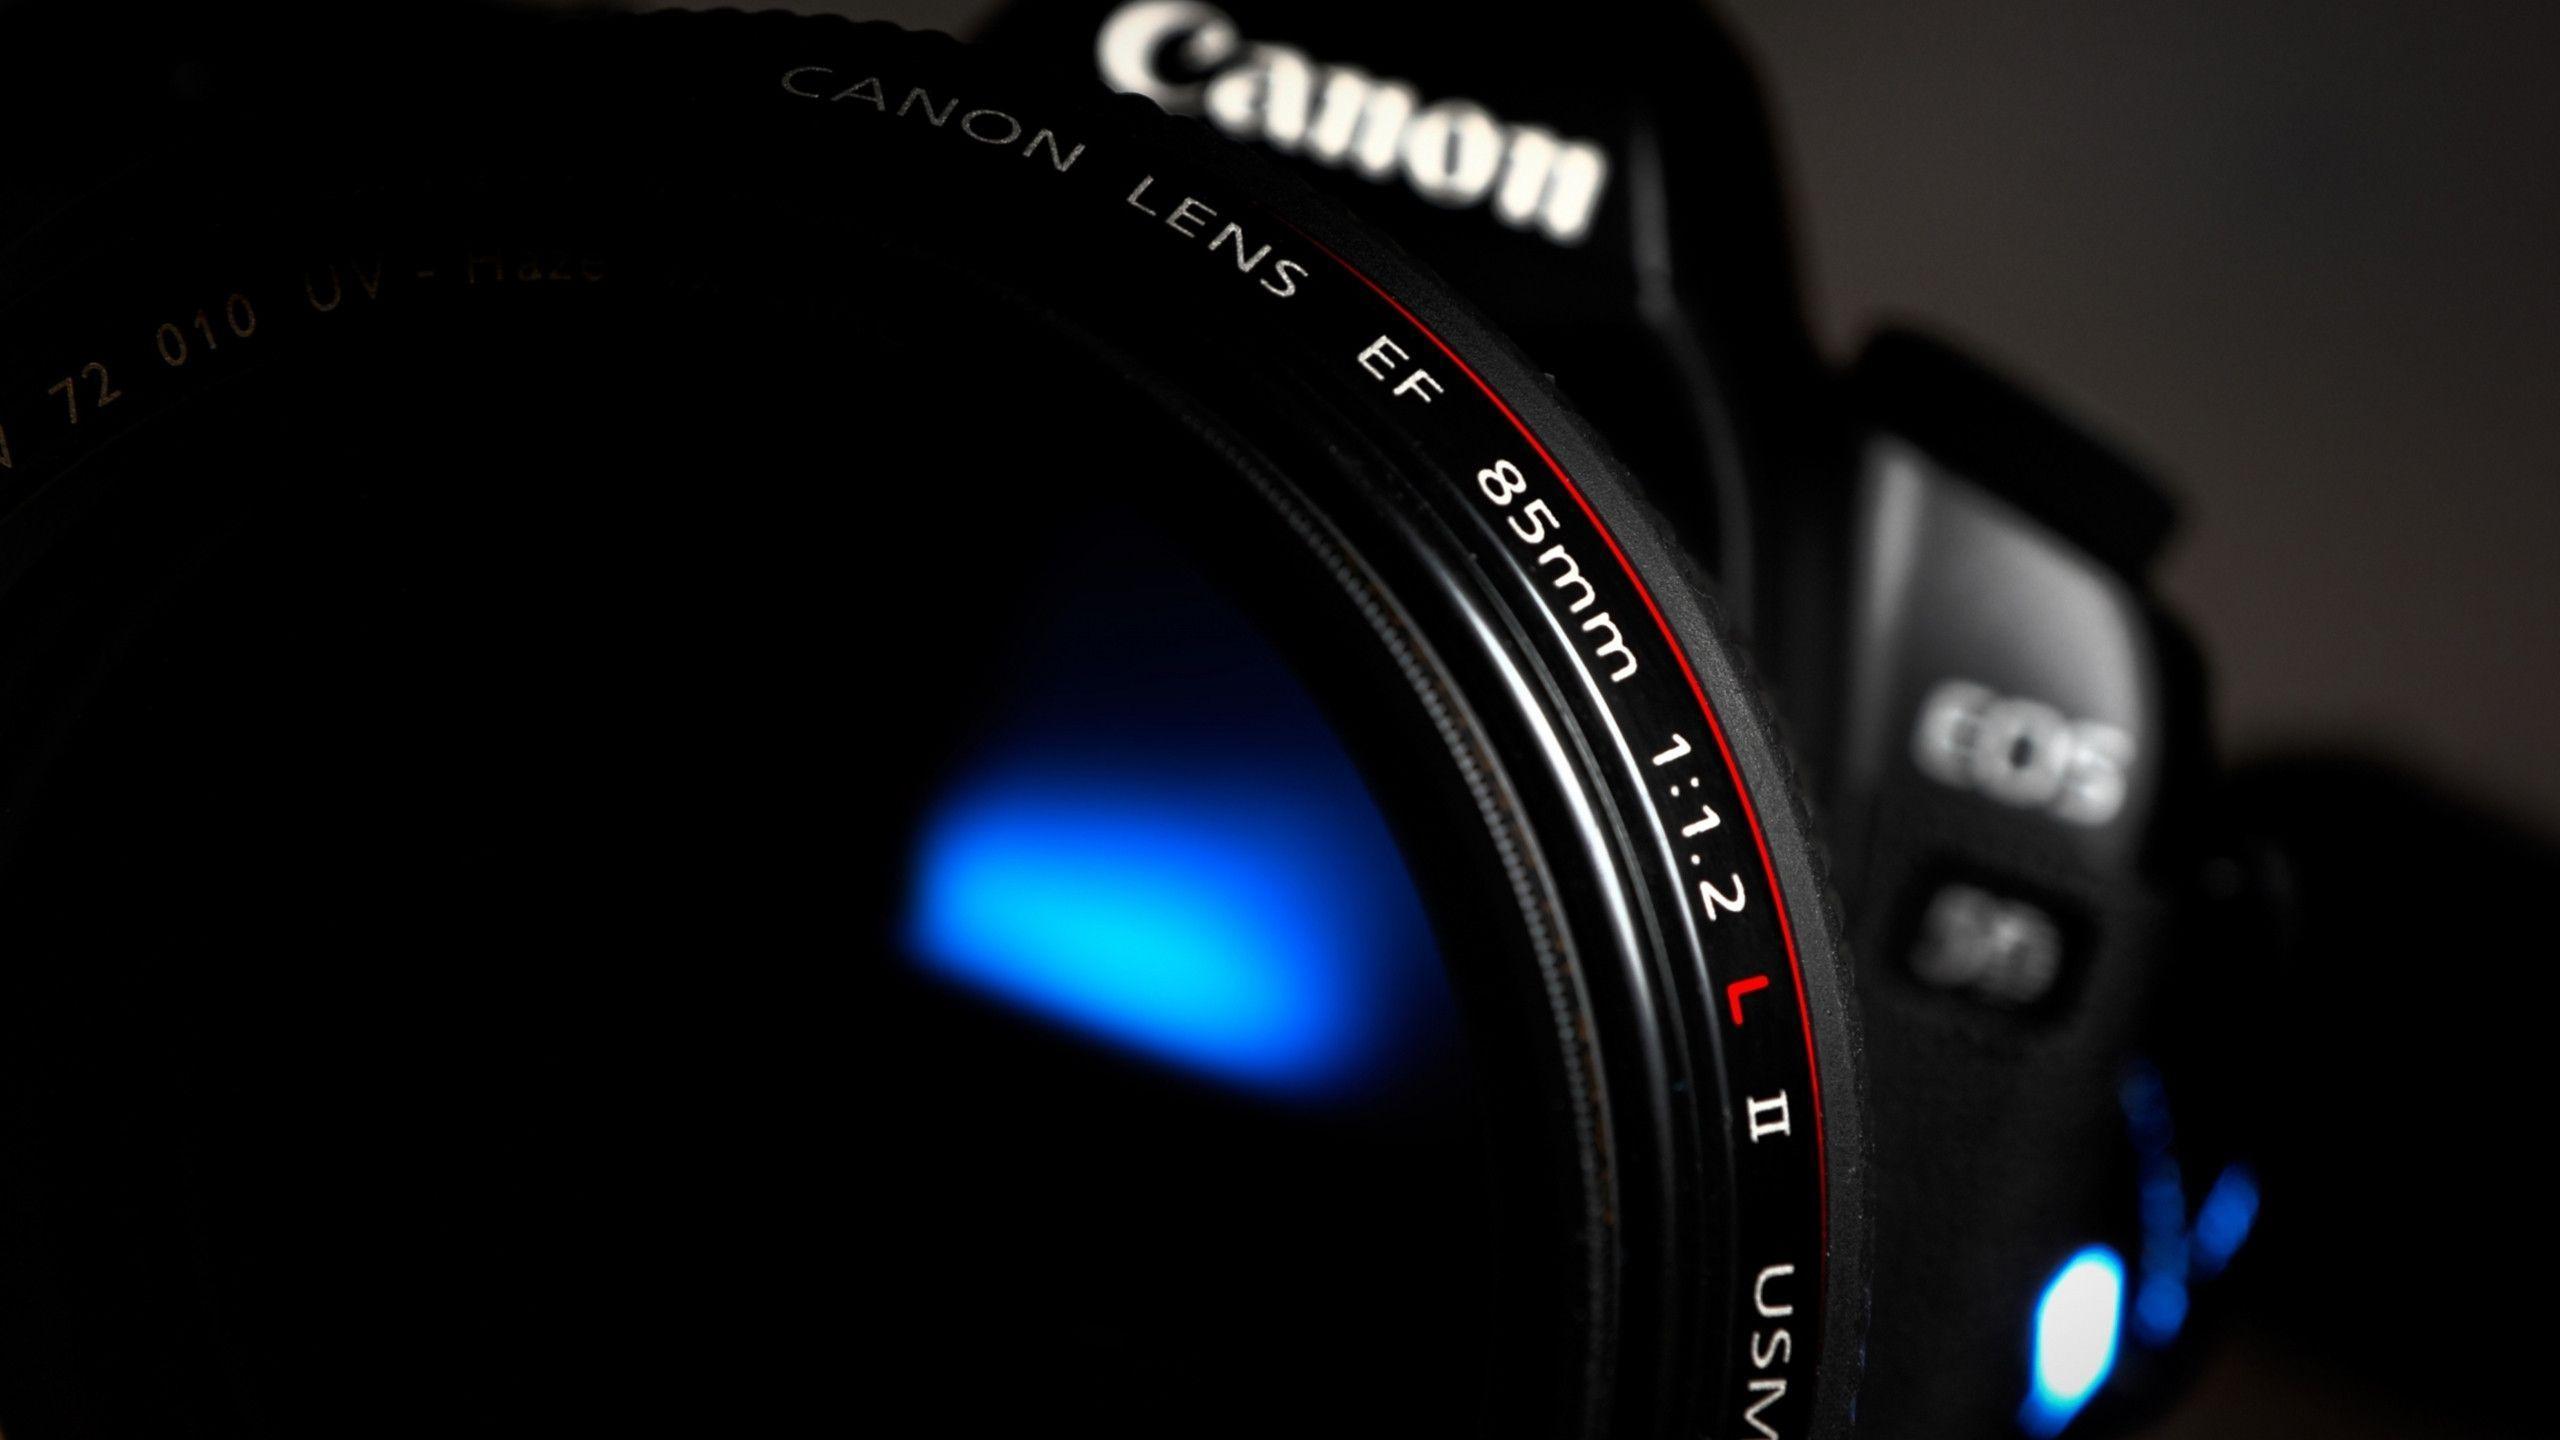 Canon Lens 2 iMac Wallpaper. HD Wallpaper Source